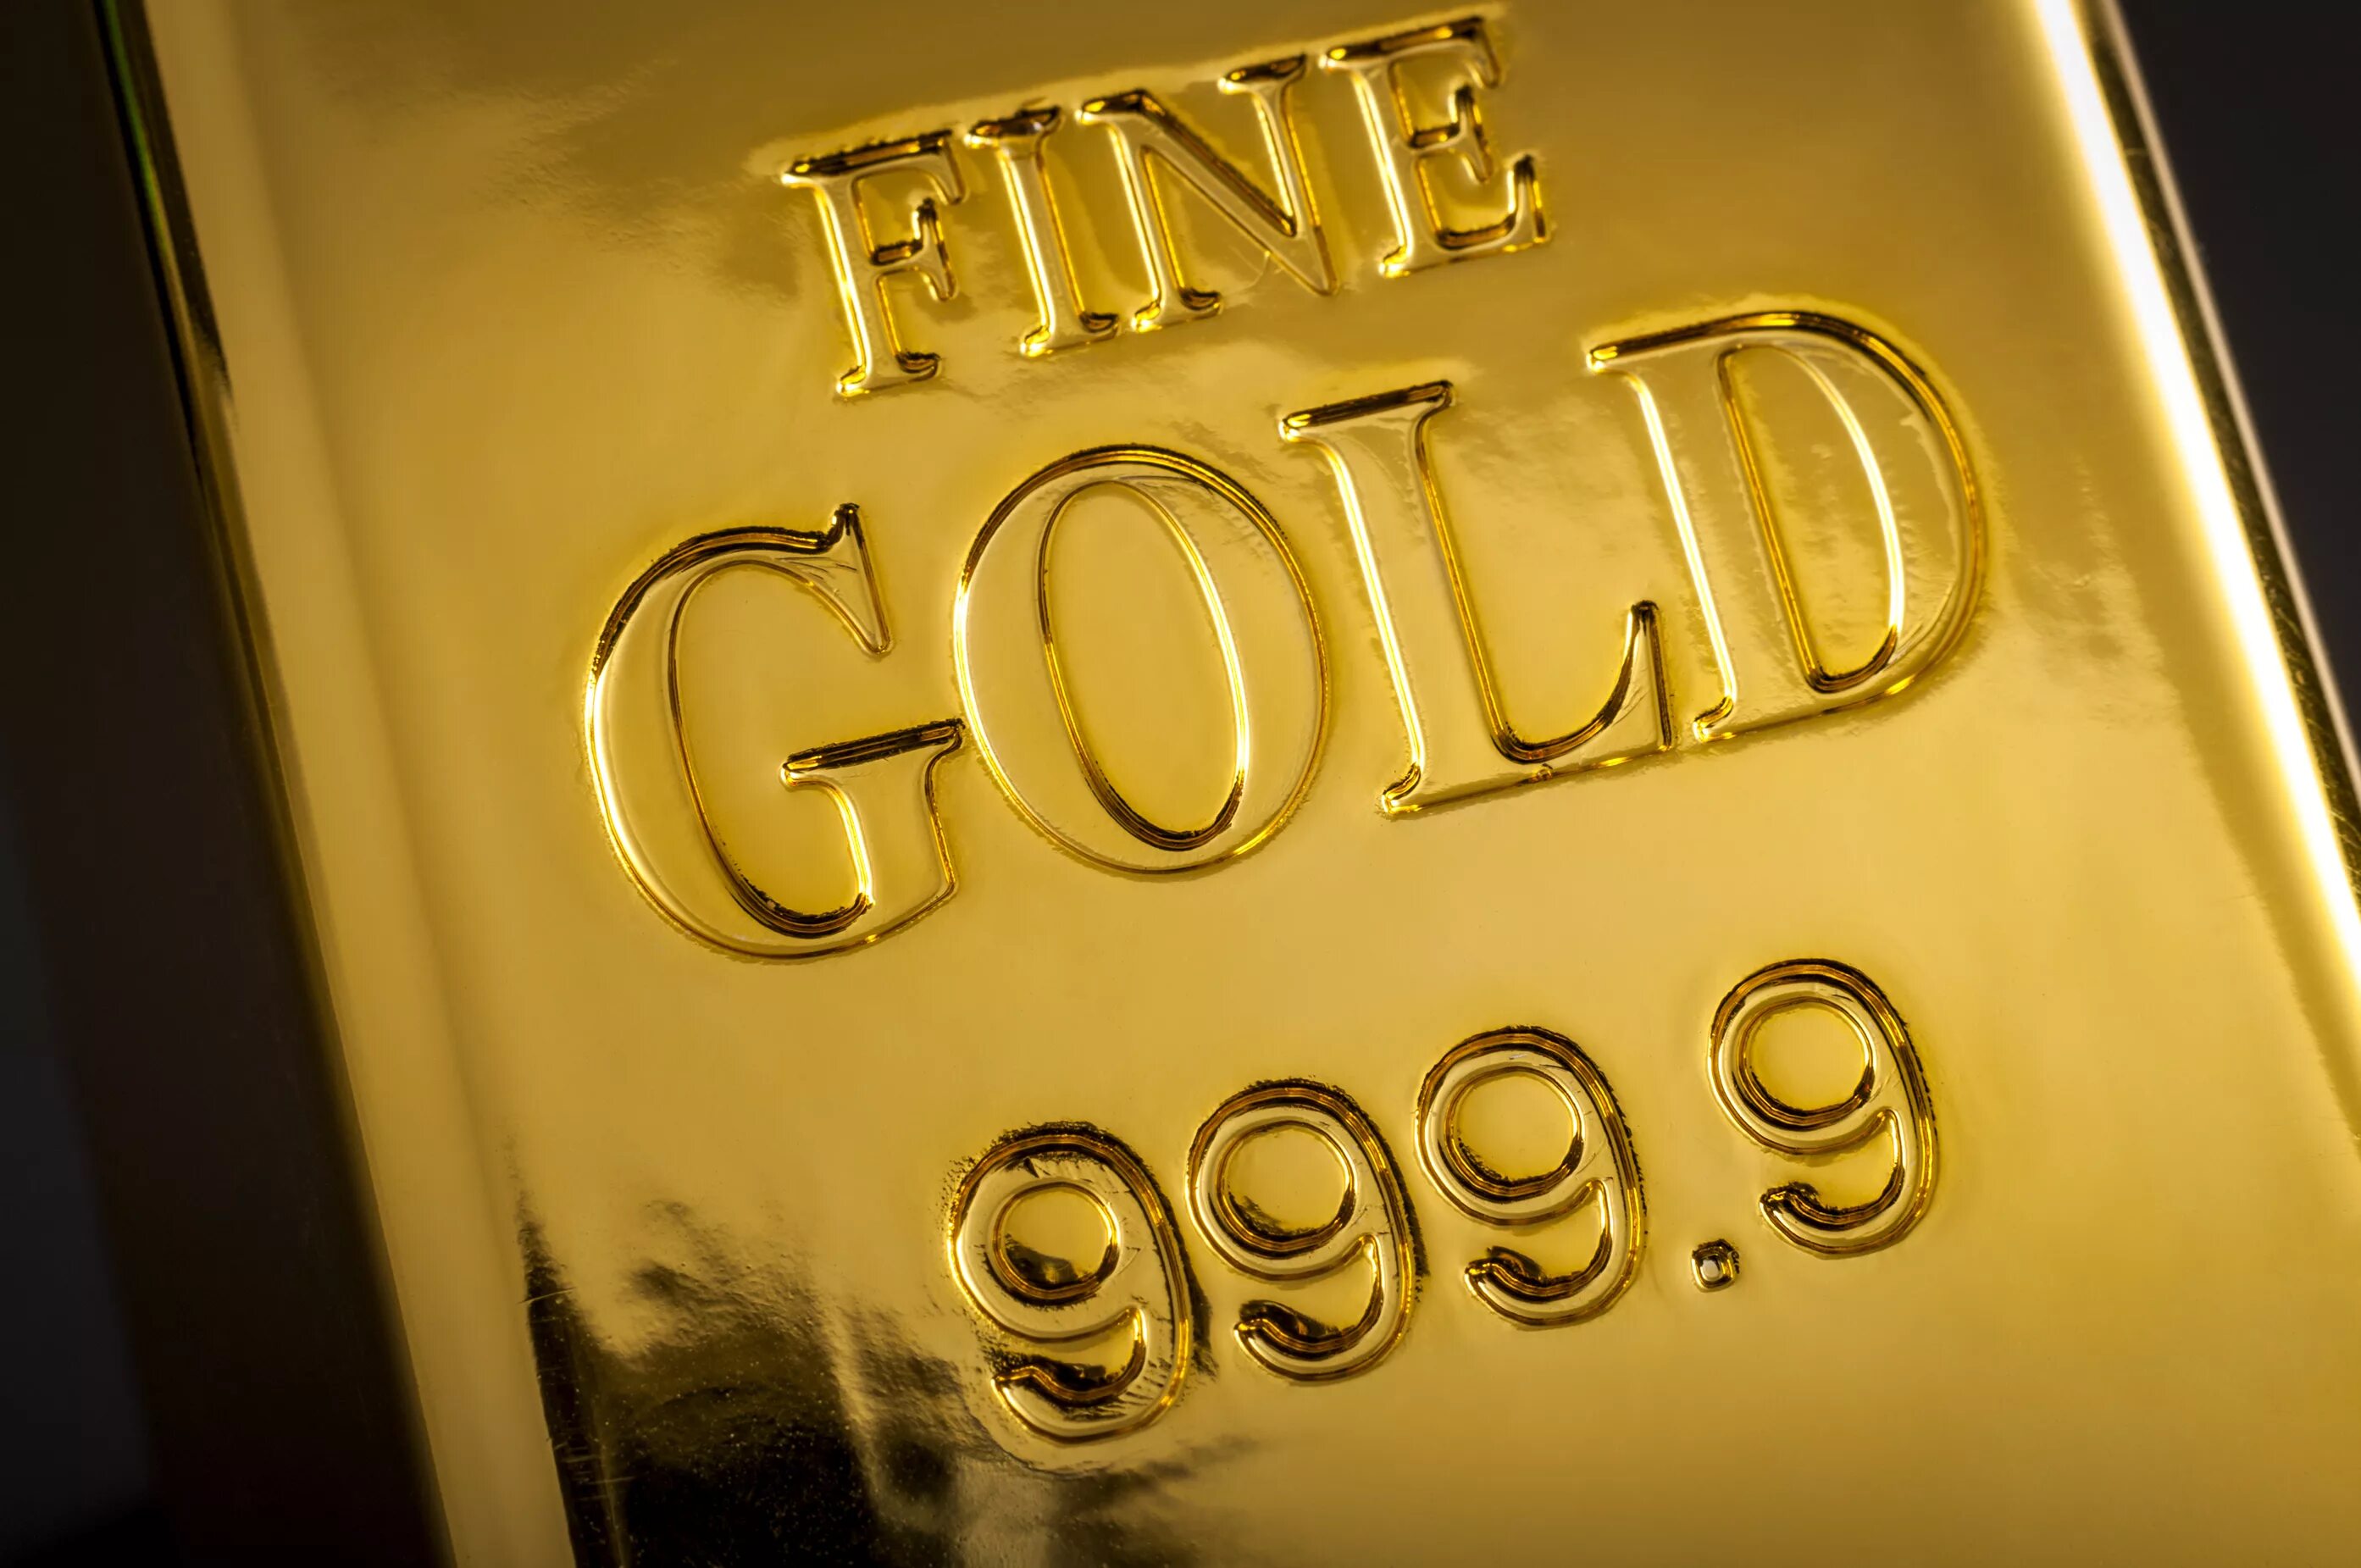 Картинка gold. Золото 9999. Золото 9999 пробы. Логотип на золотом фоне. Gold картинки.